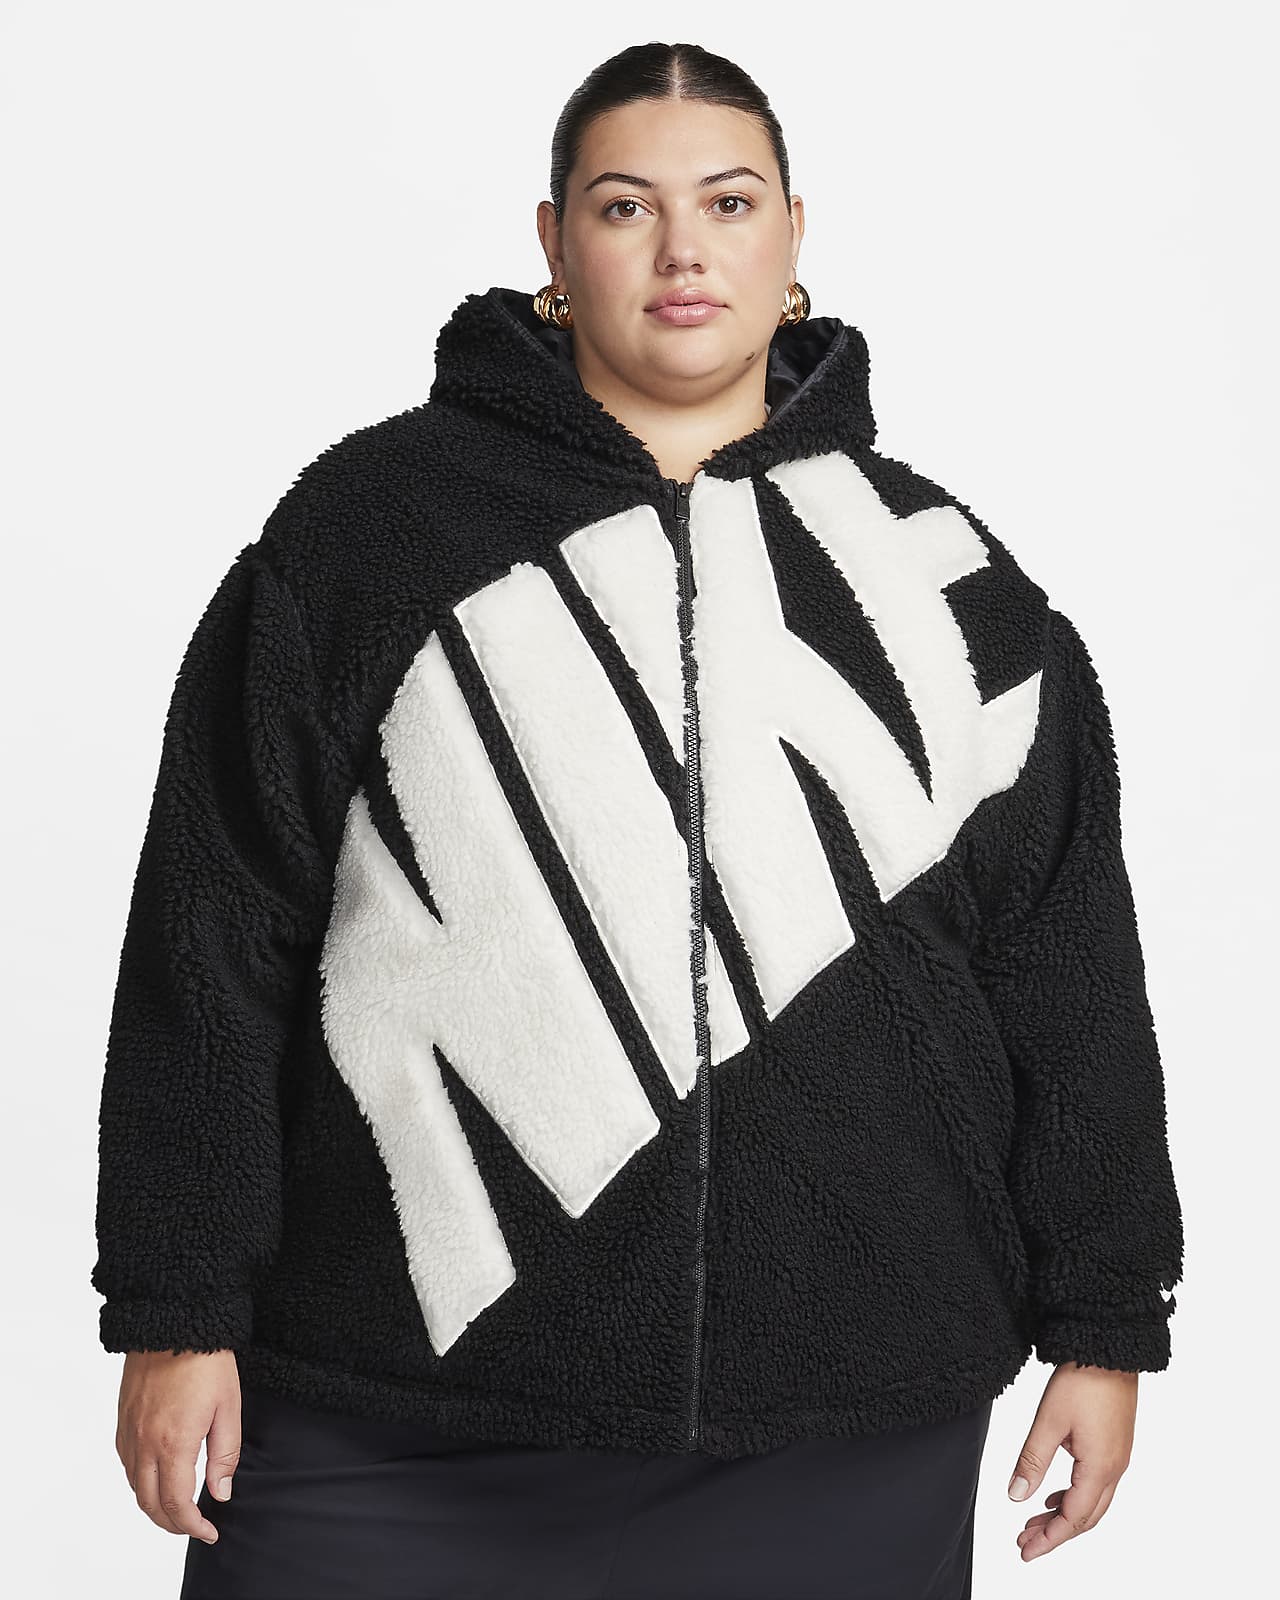 Nike Sportswear CLUB - Veste d'hiver - black/white/noir 